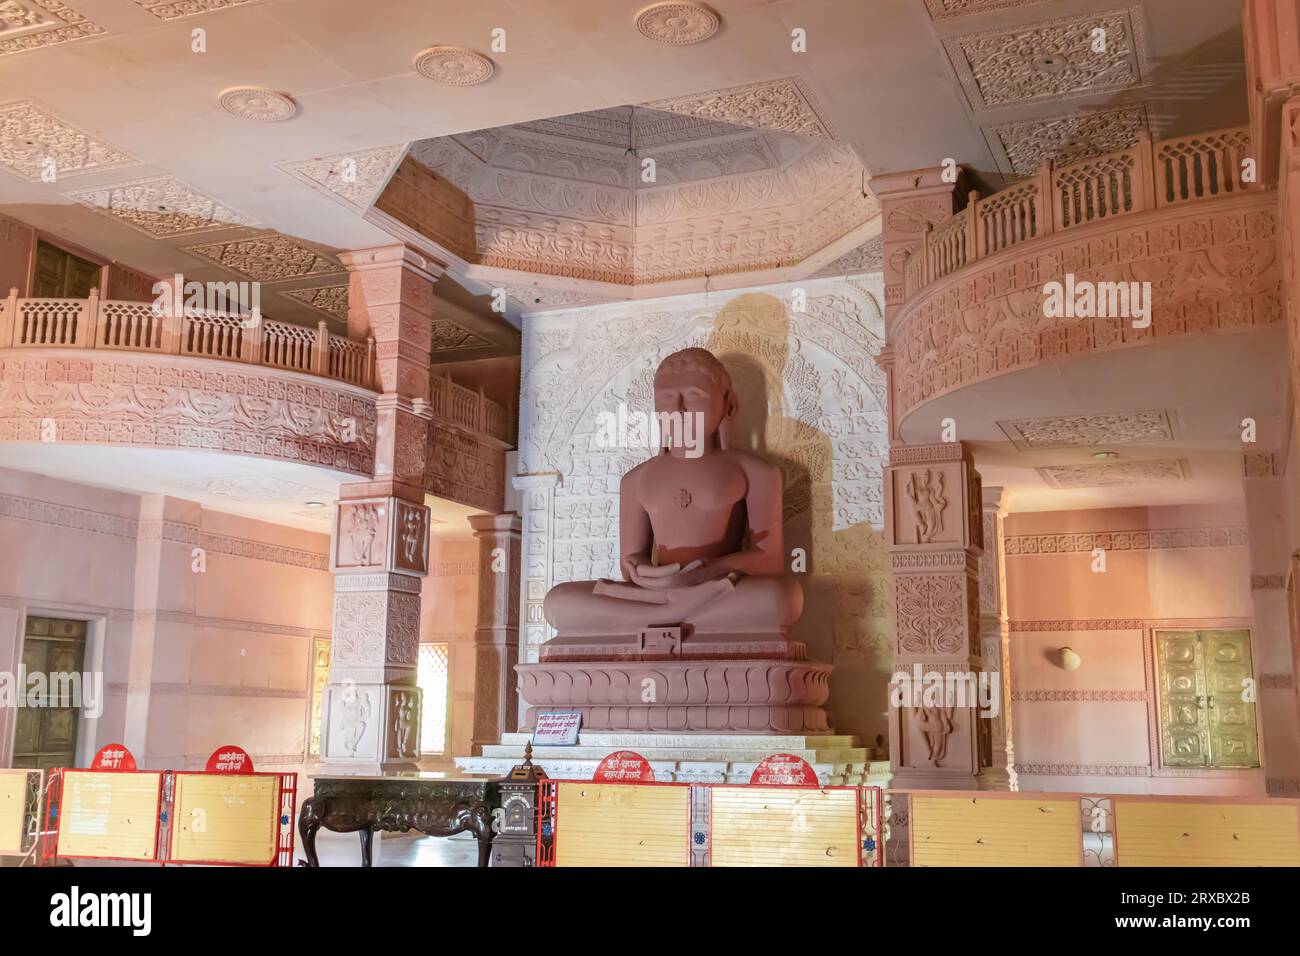 isolated red stone jain god holy statue in meditation from different angle image is taken at Shri Digamber Jain Gyanoday Tirth Kshetra, Nareli Jain Ma Stock Photo